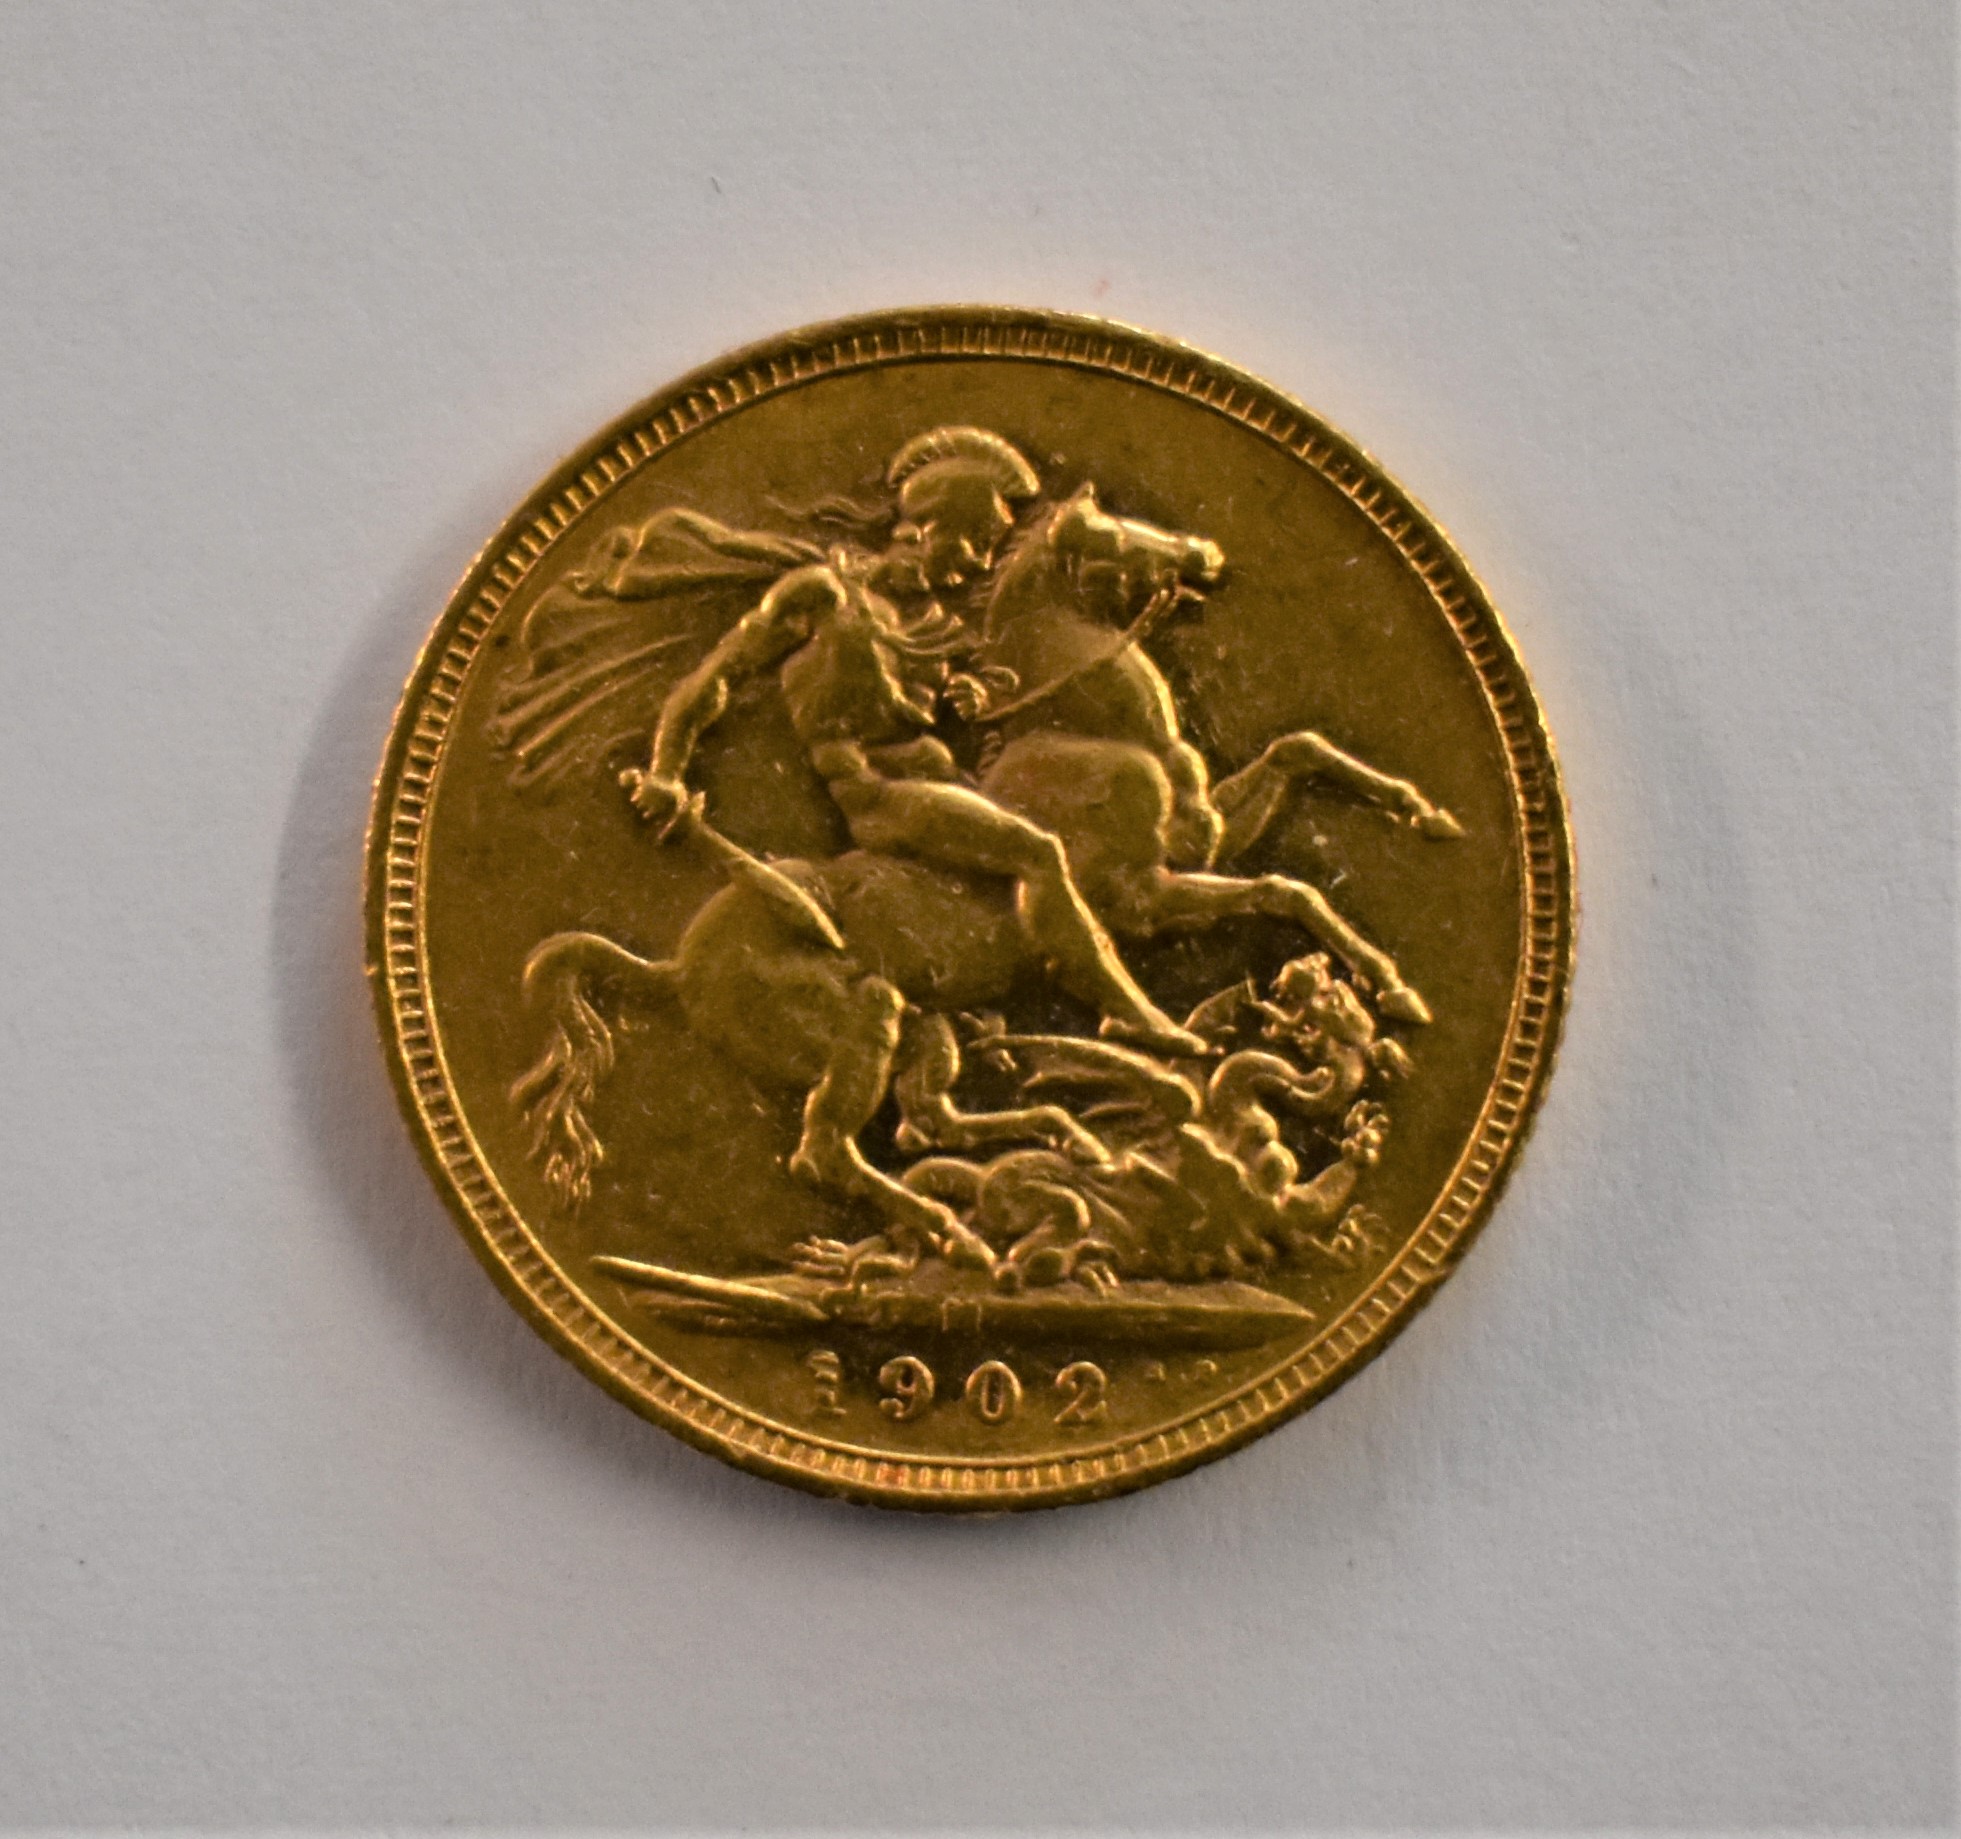 Gold 1902 KEDVII Sovereign, GVF - Image 2 of 2